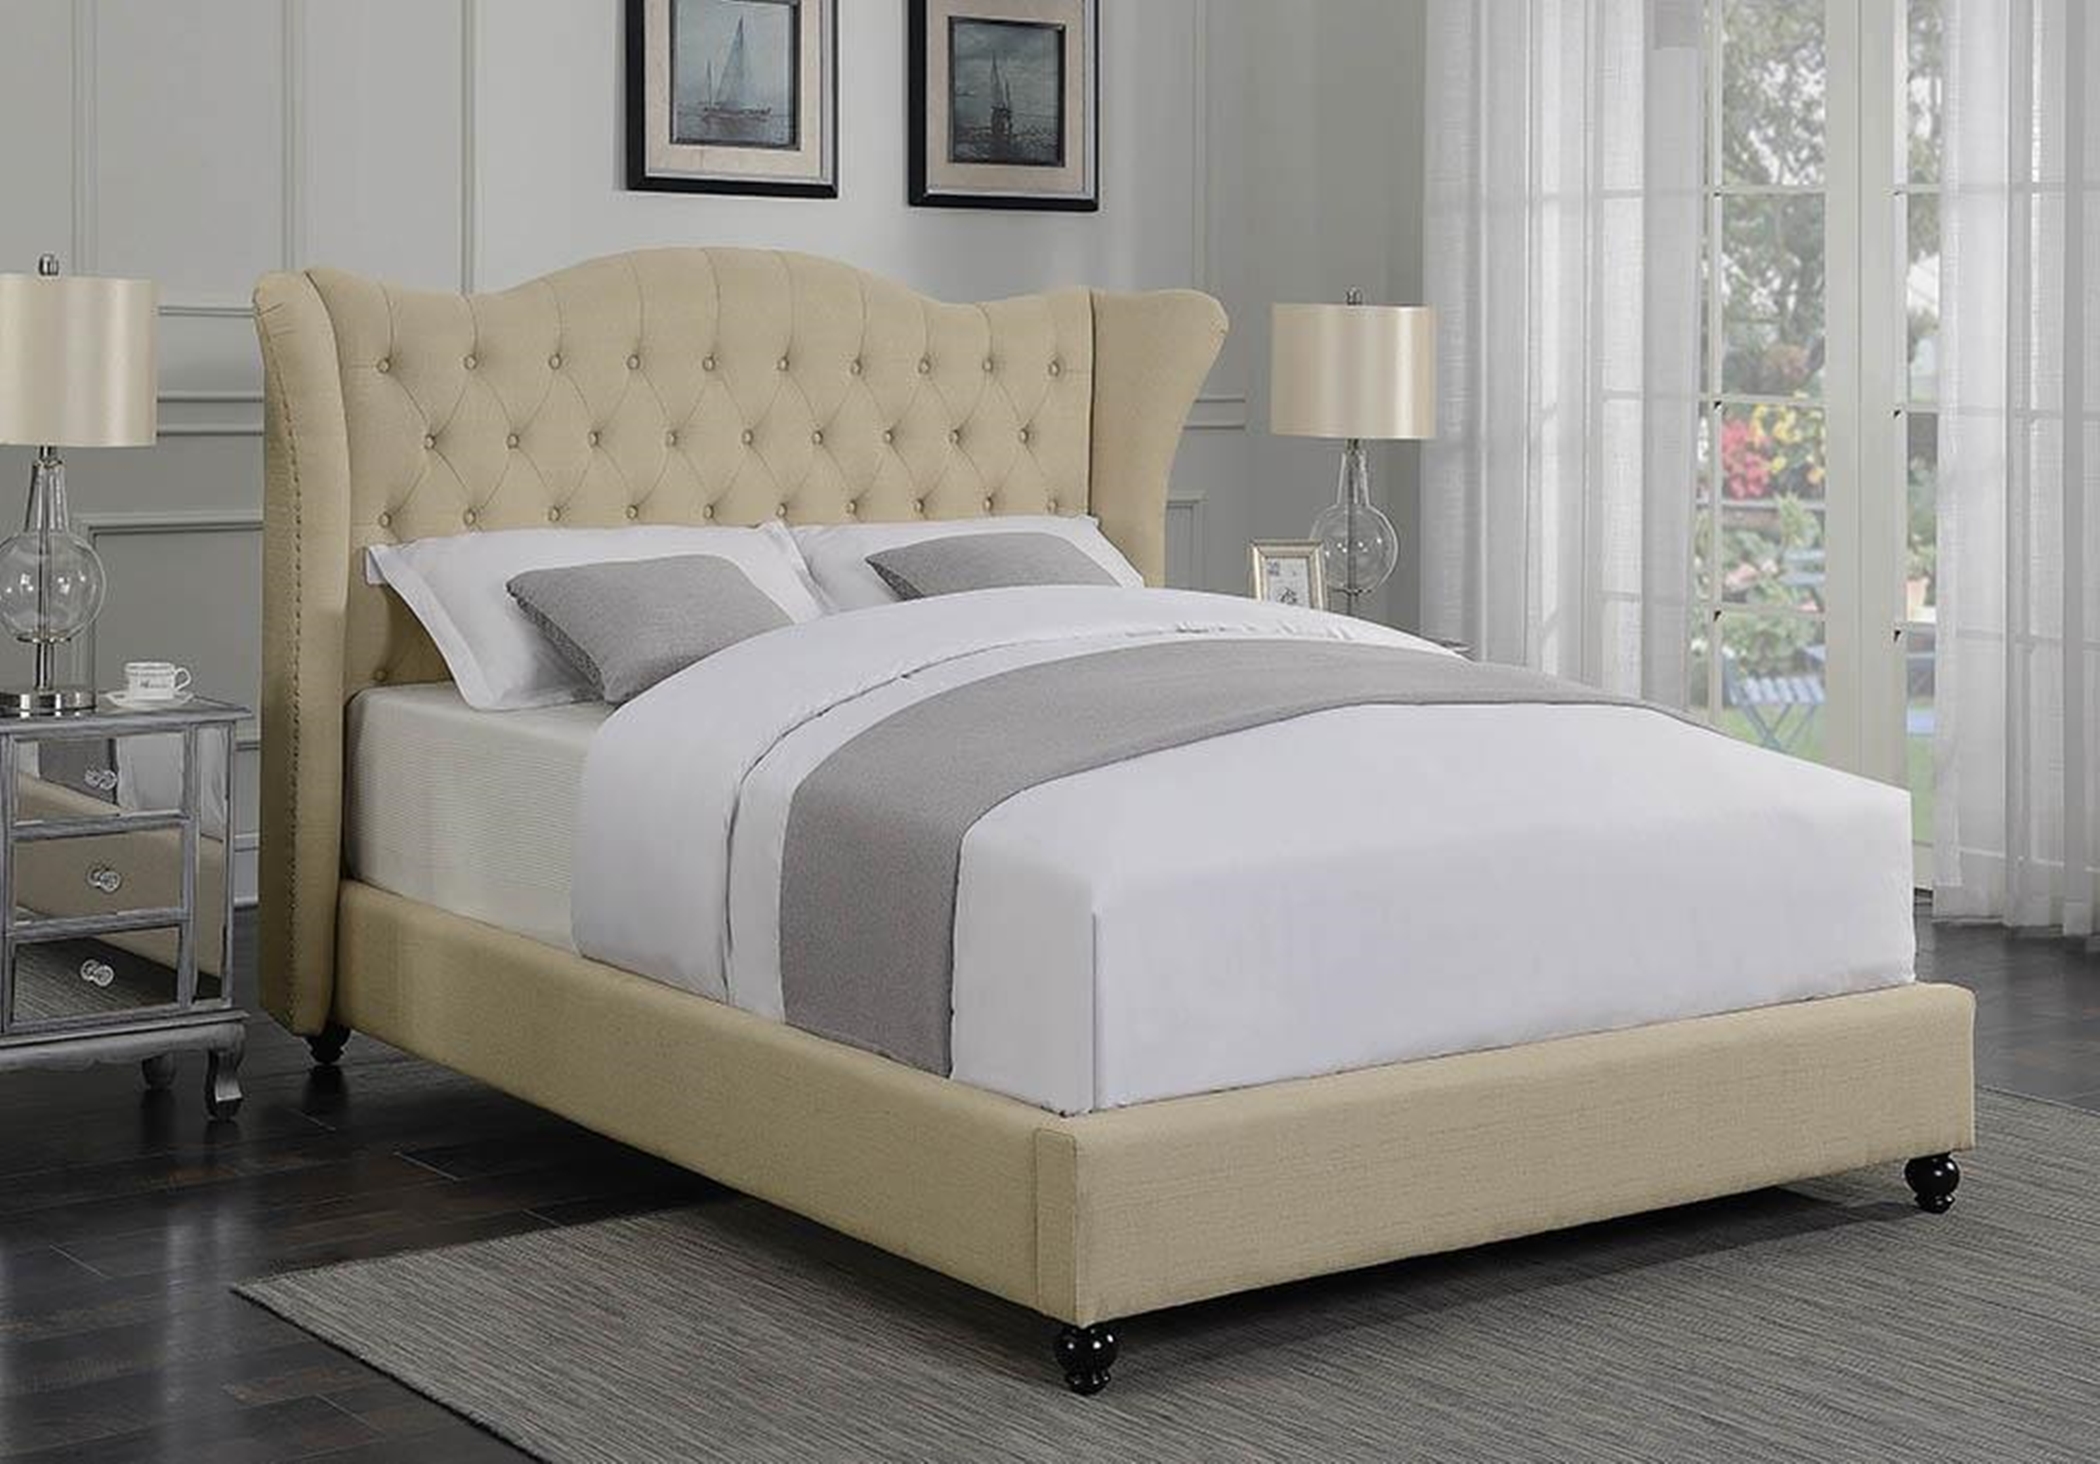 Coronado Beige Upholstered Queen Bed - Click Image to Close